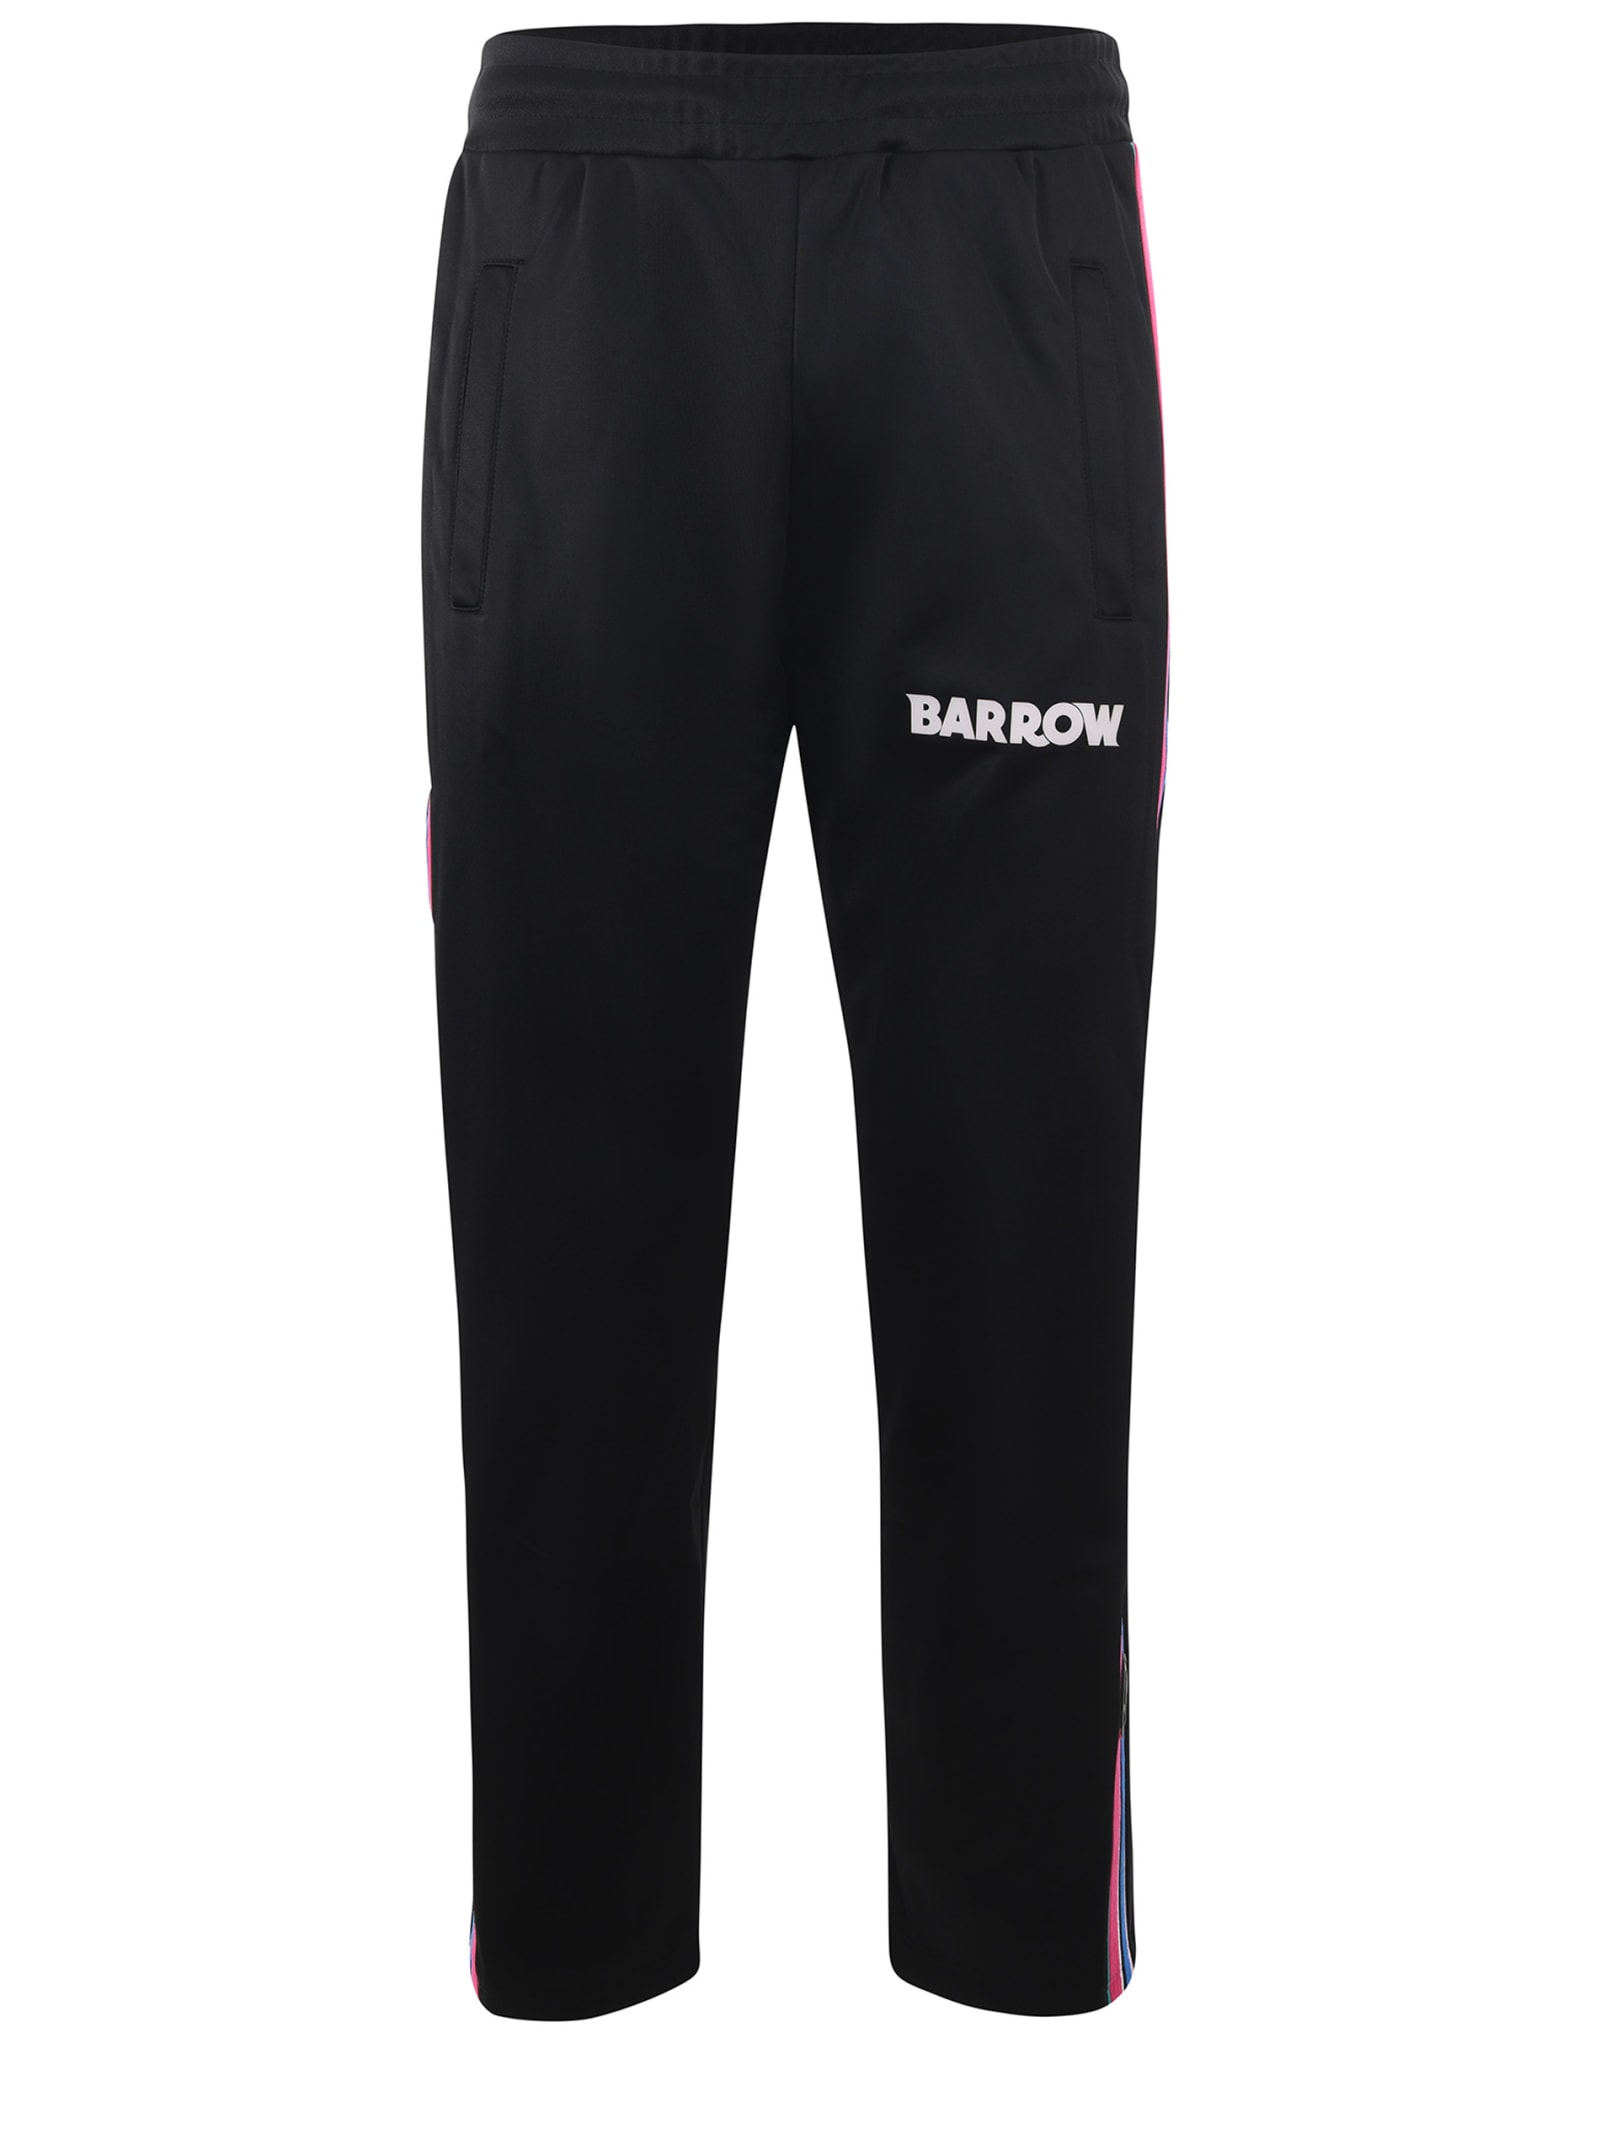 Trousers Barrow In Nylon